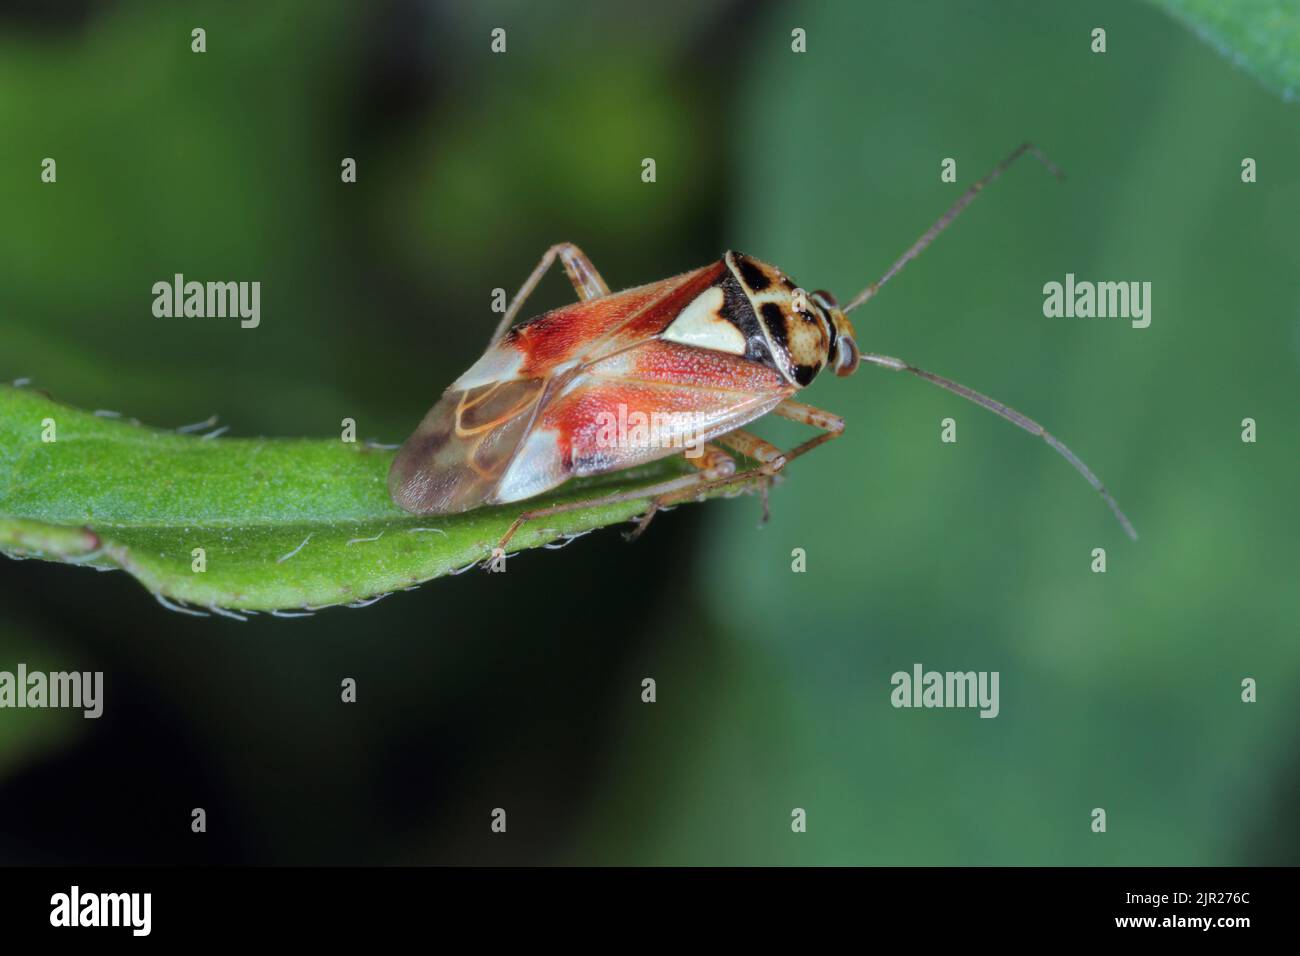 Lygus Bug form the family Miridae Stock Photo